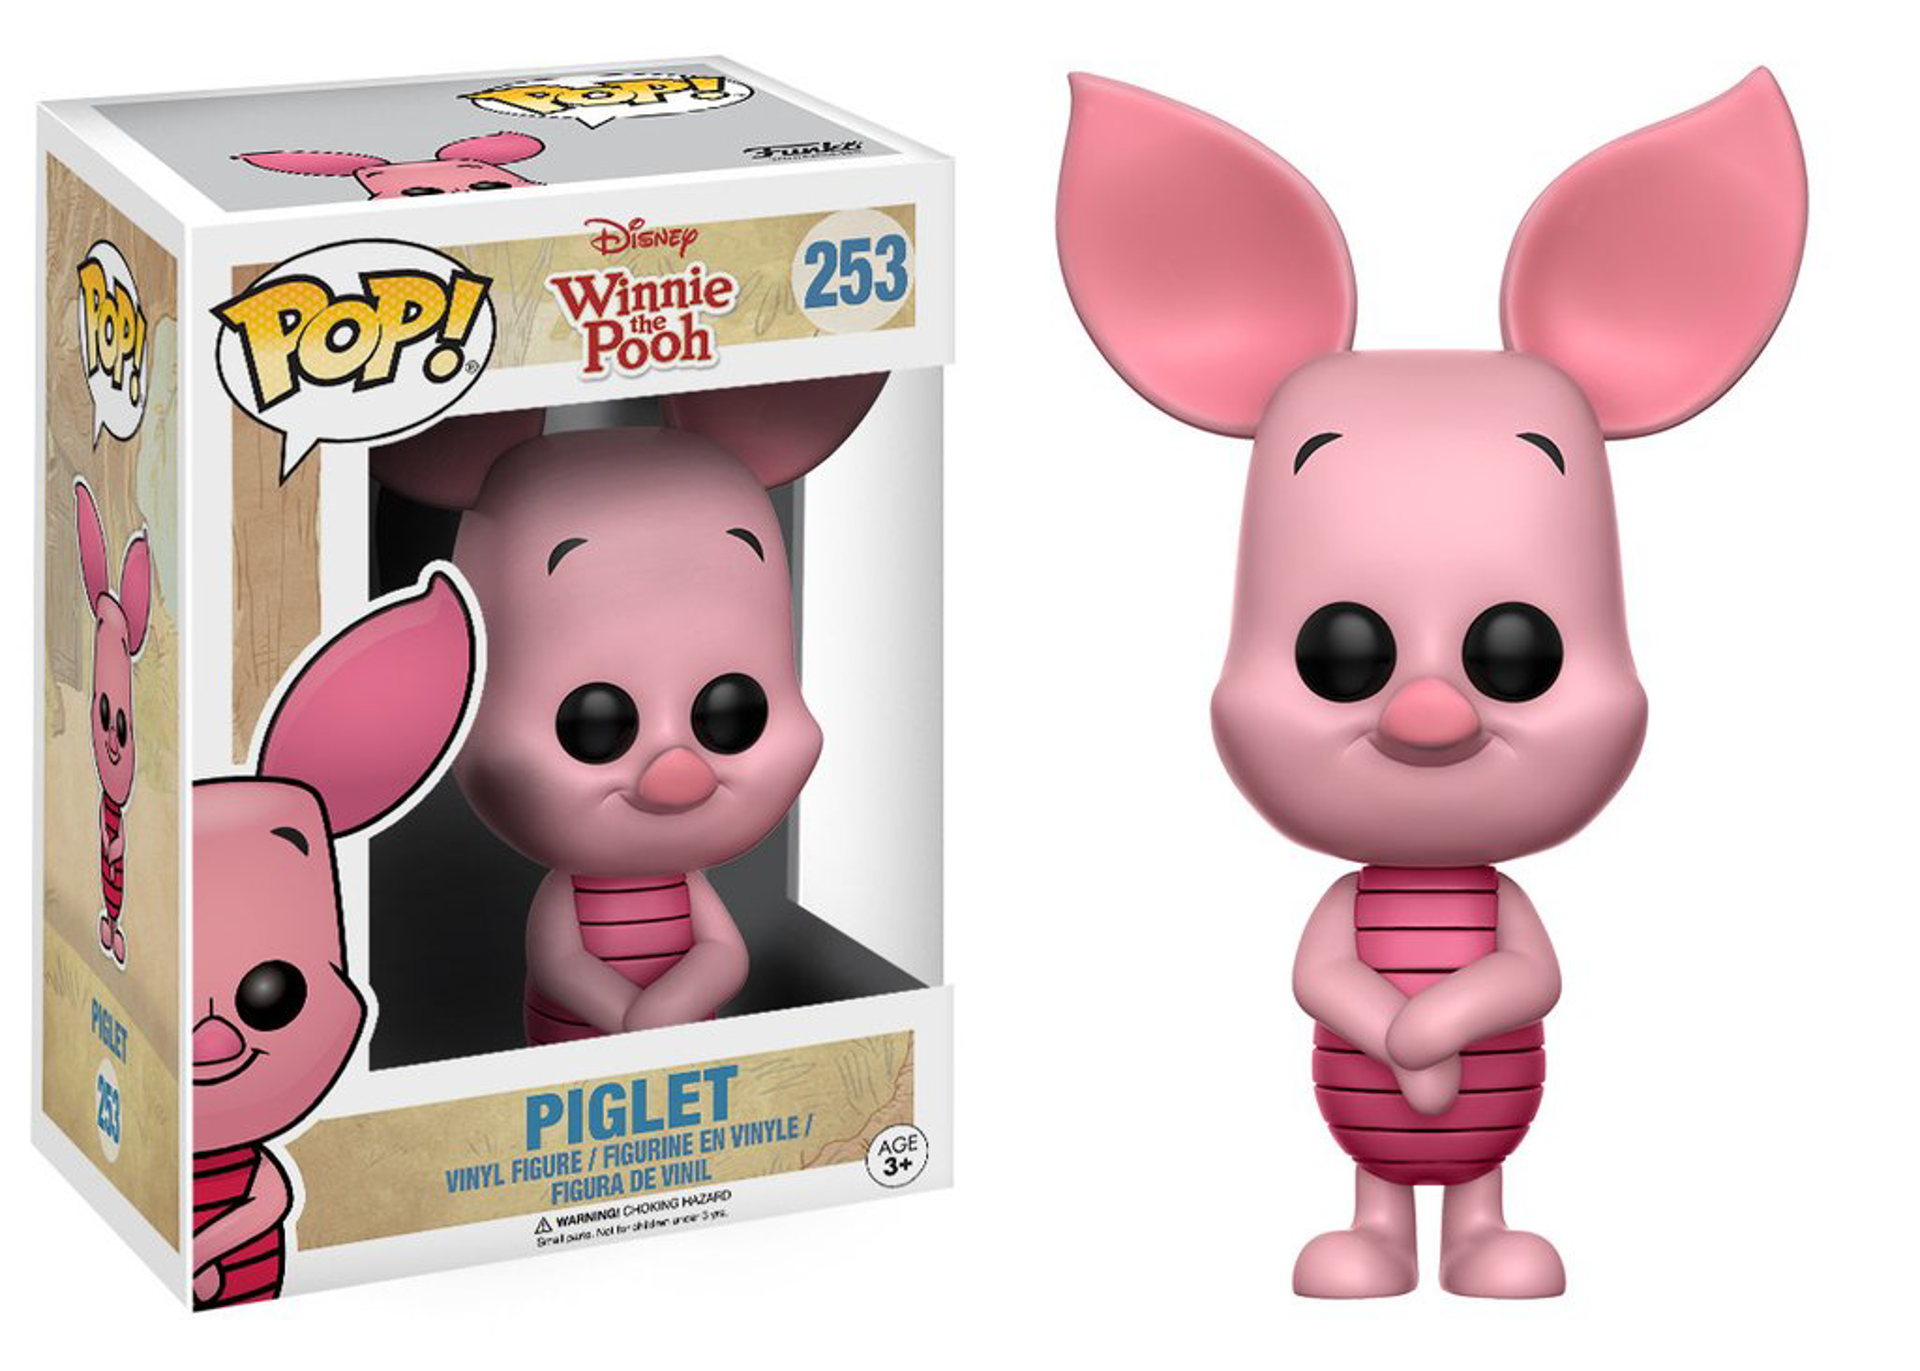 Funko Pop! Disney Winnie the Pooh Piglet ENG Merchandising